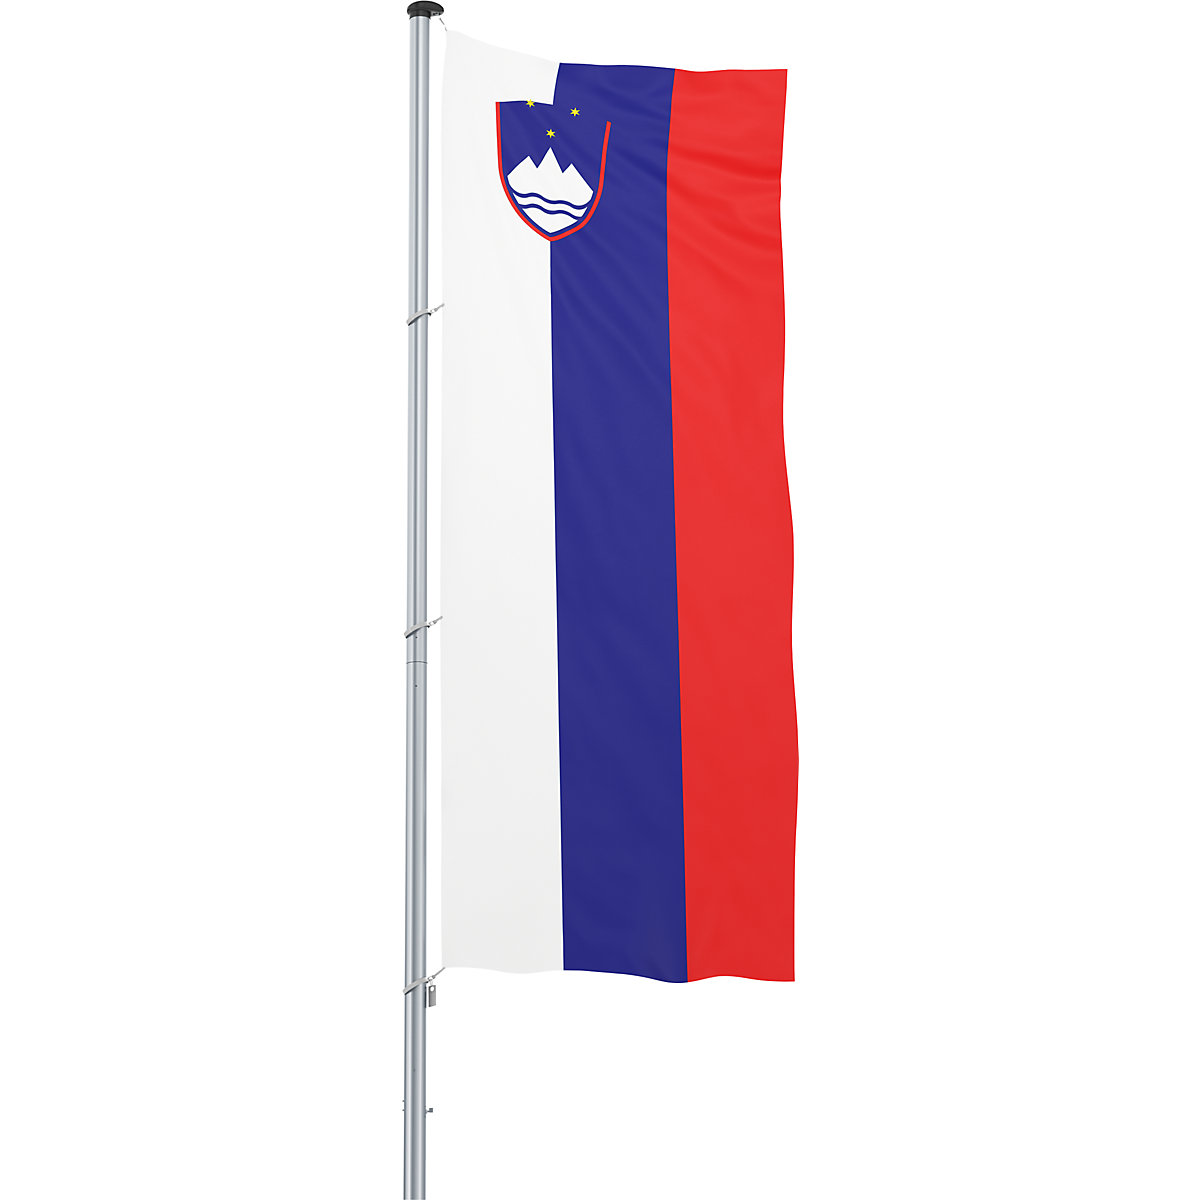 Mannus – Bandera para izar/bandera del país, formato 1,2 x 3 m, Eslovenia